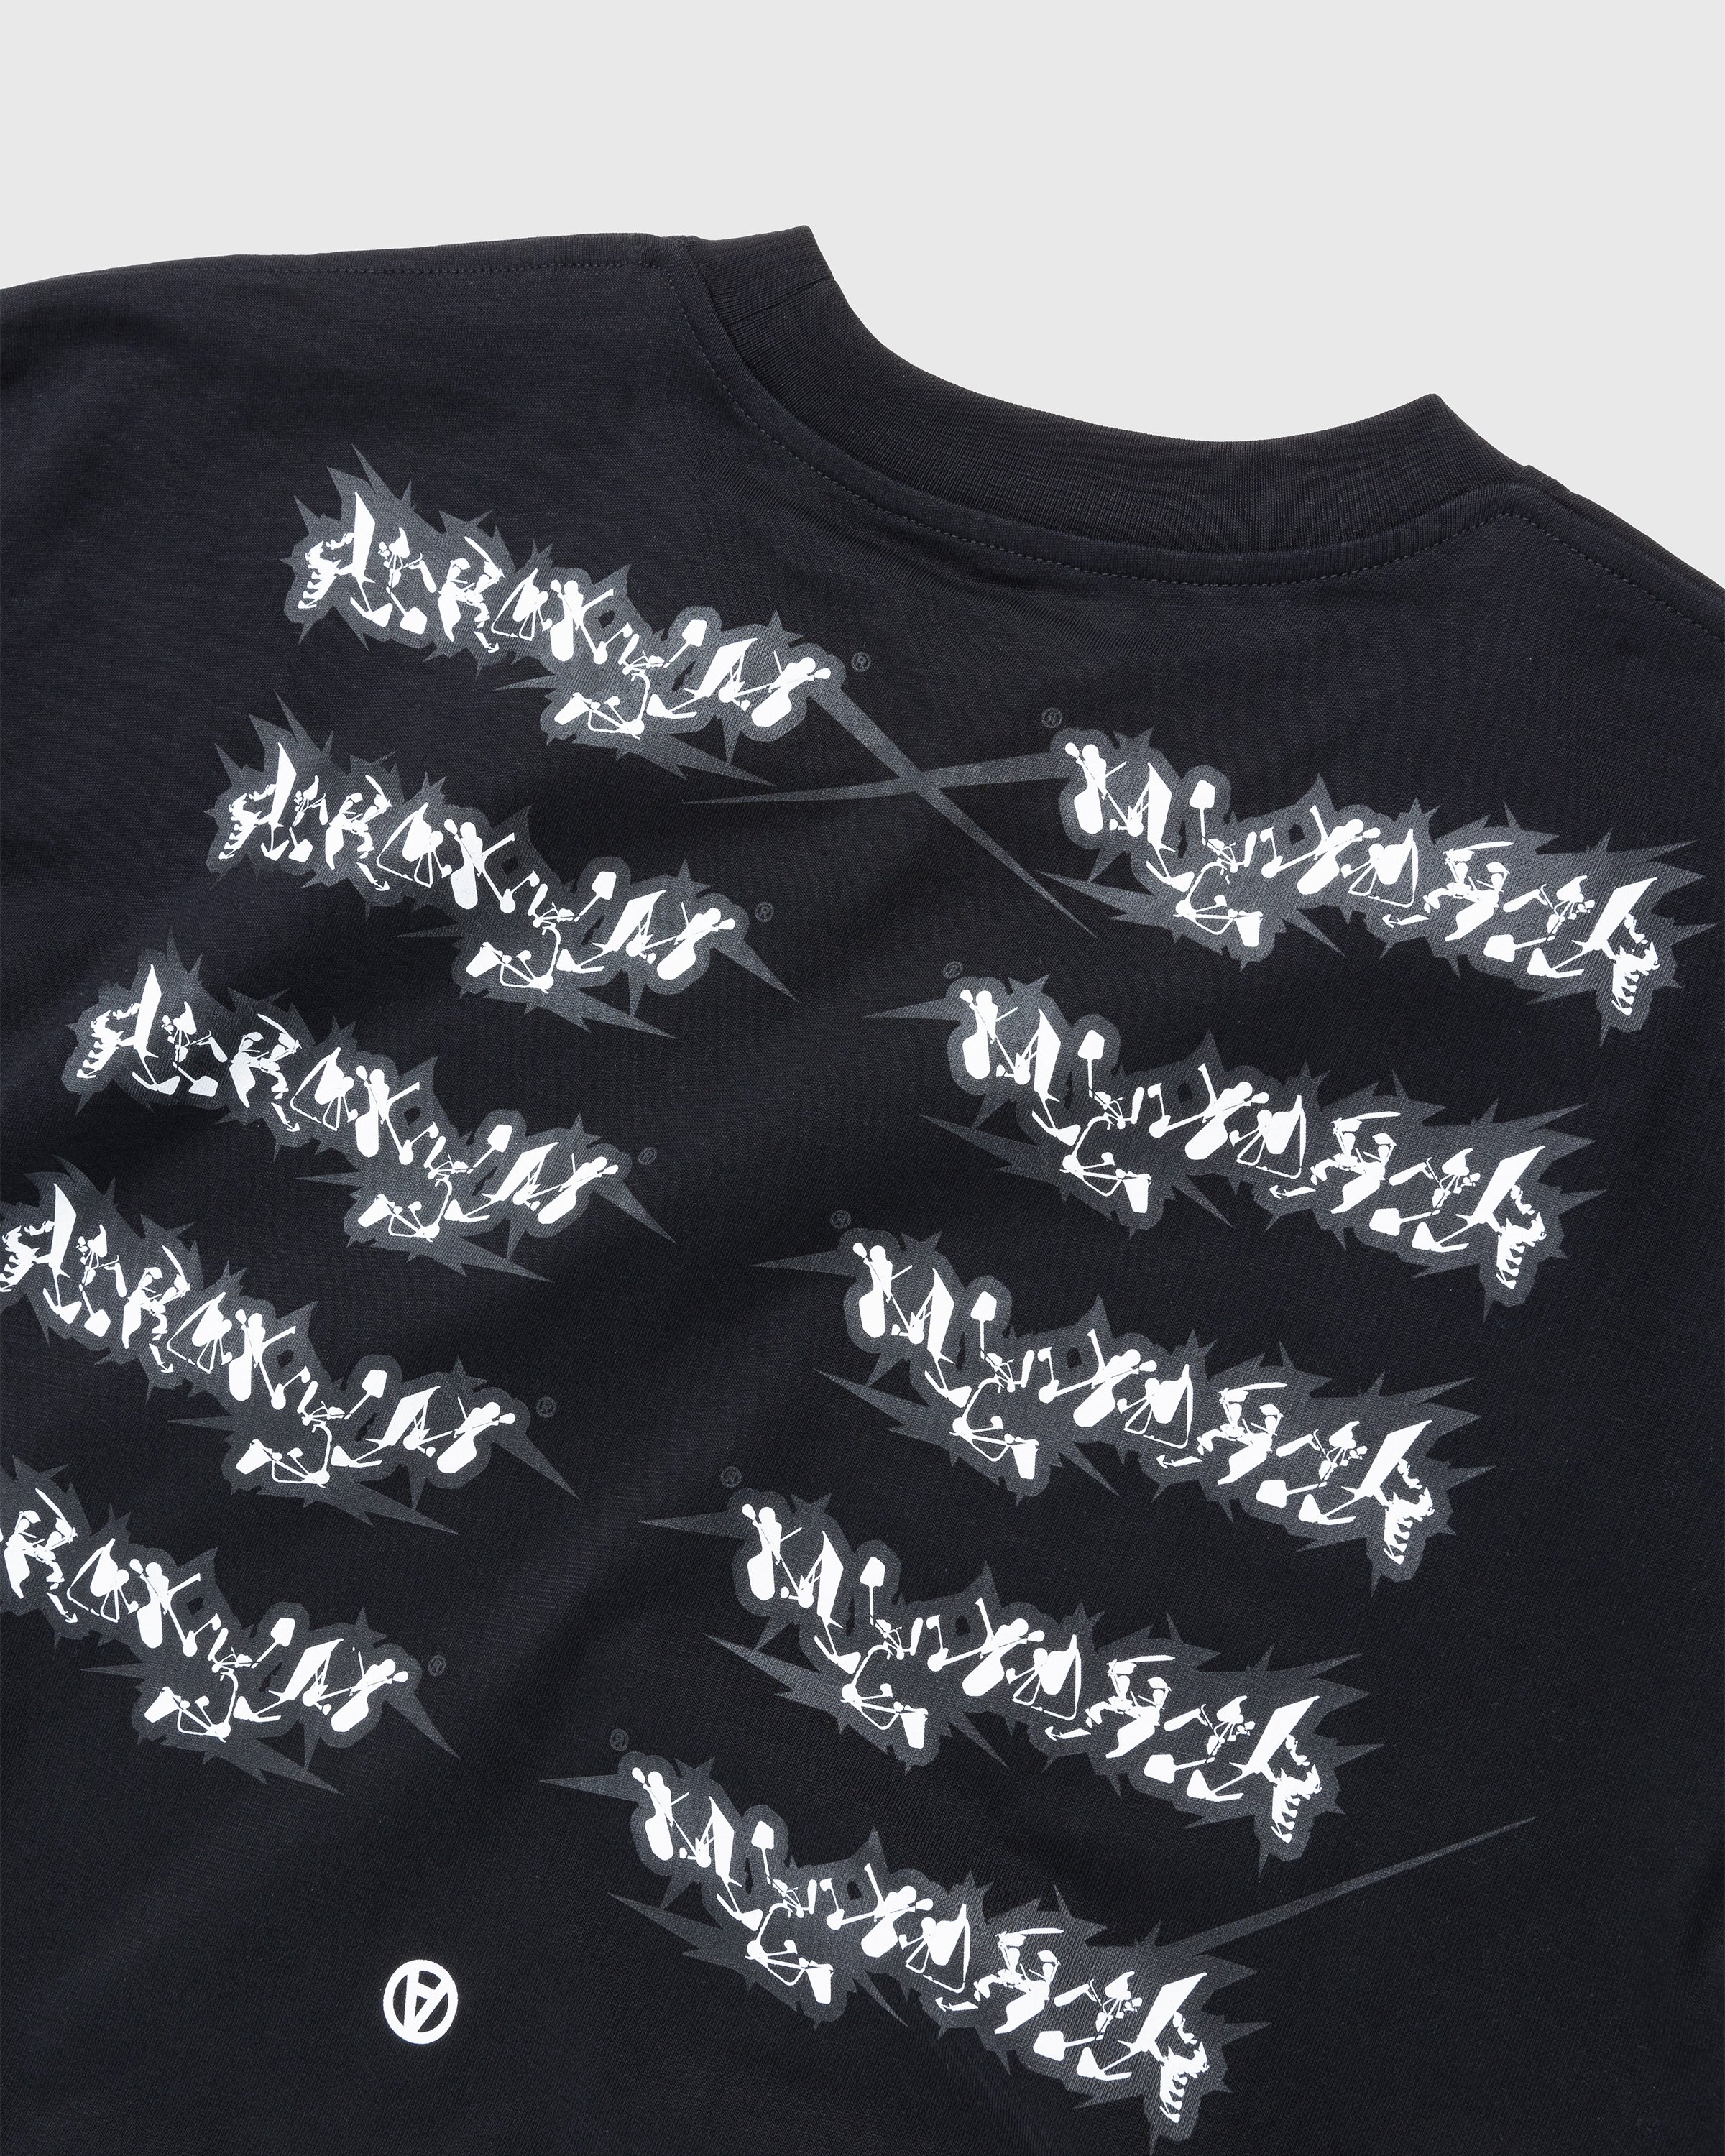 ACRONYM - S28-PR-A Organic Cotton T-Shirt Black - Clothing - Black - Image 3